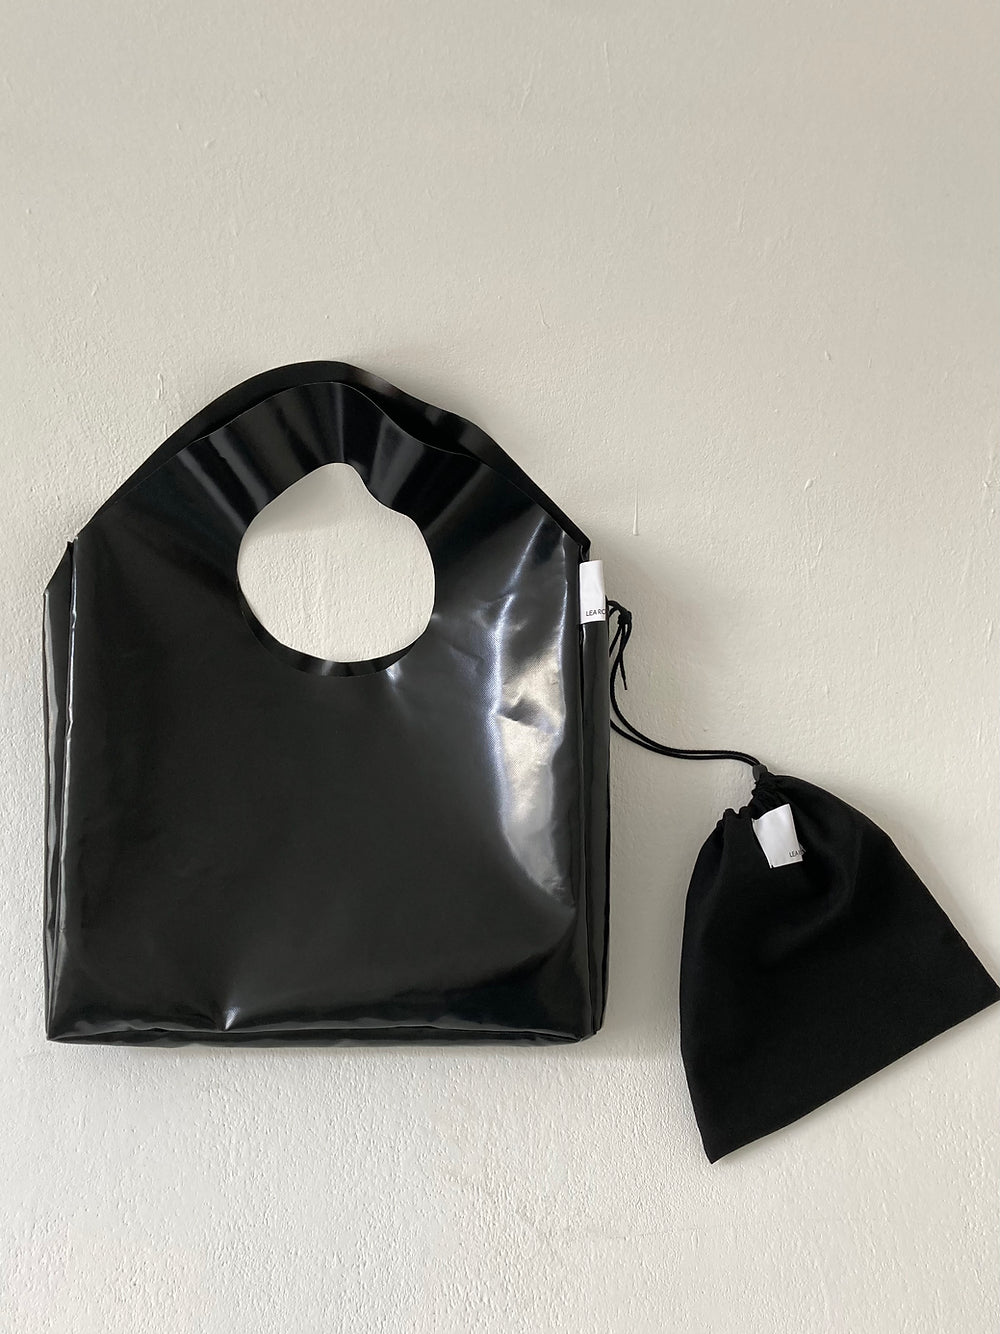 Bag Nr 10 by Lea Roesch - black